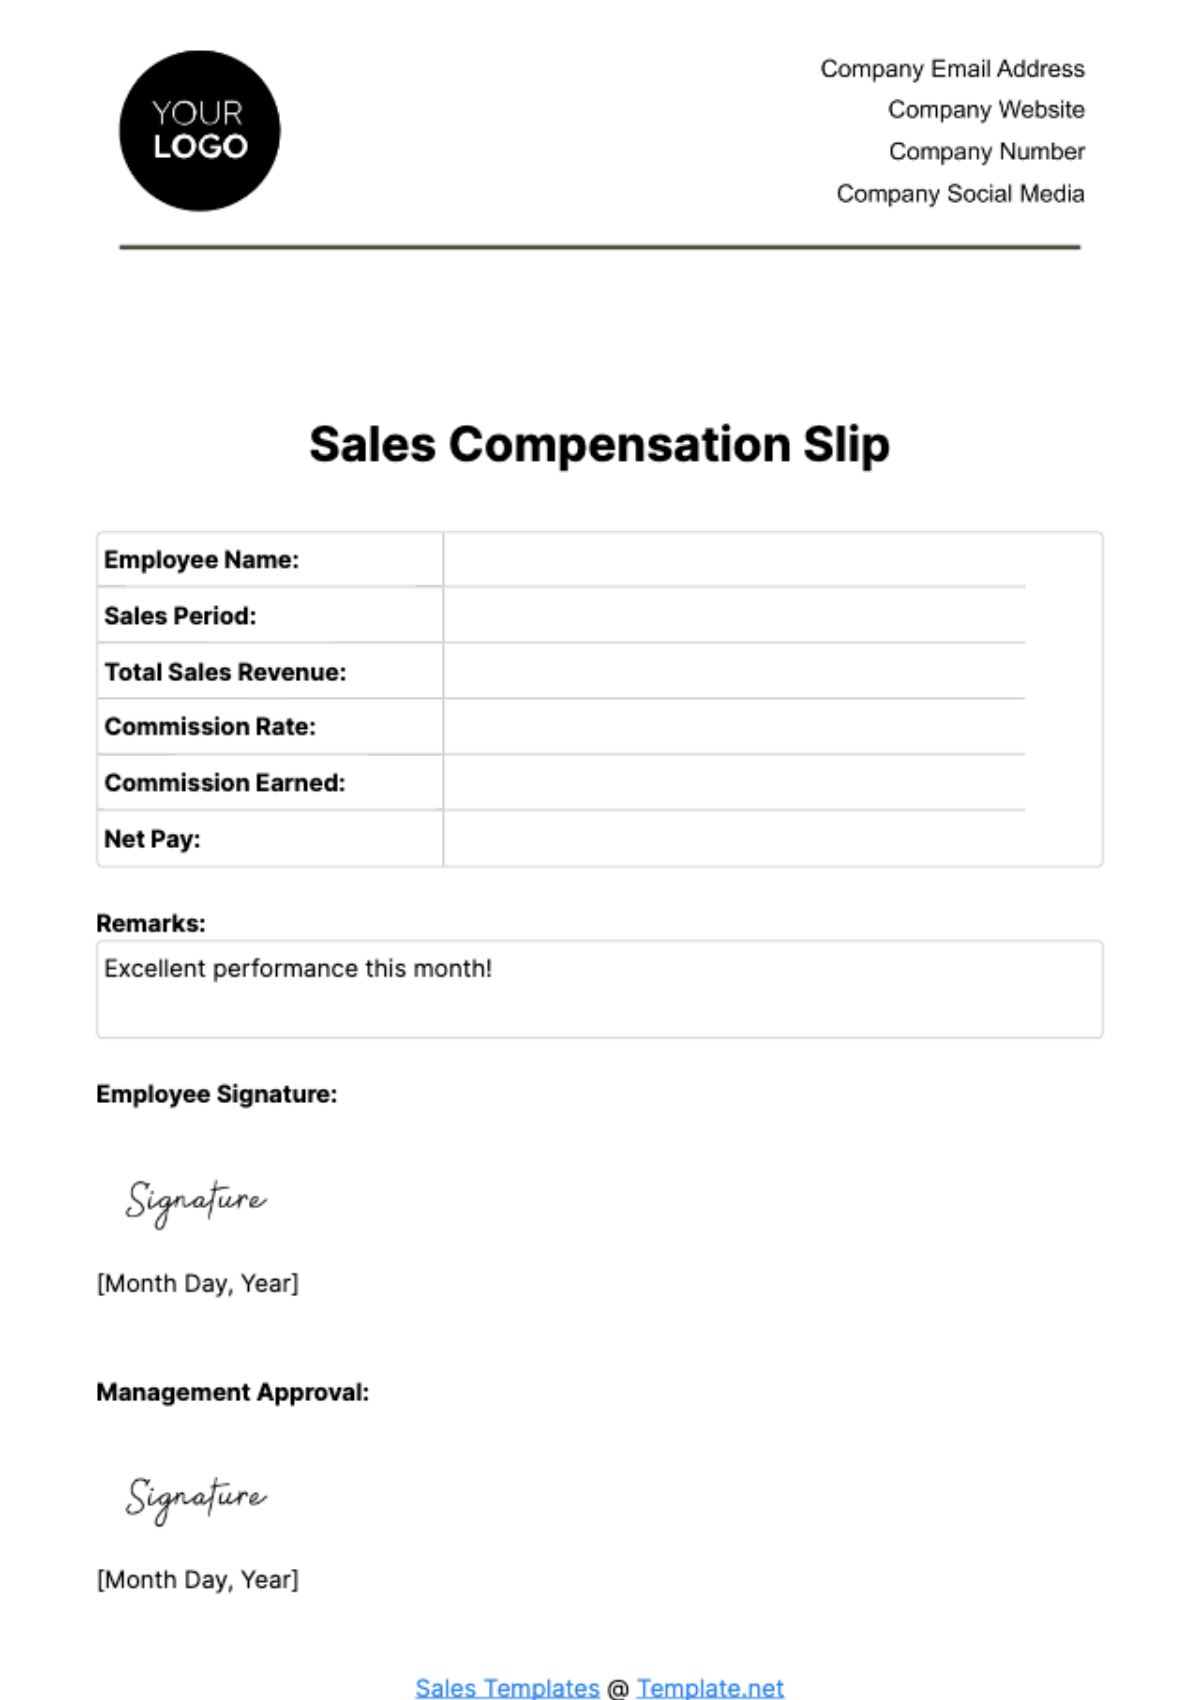 Free Sales Compensation Slip Template